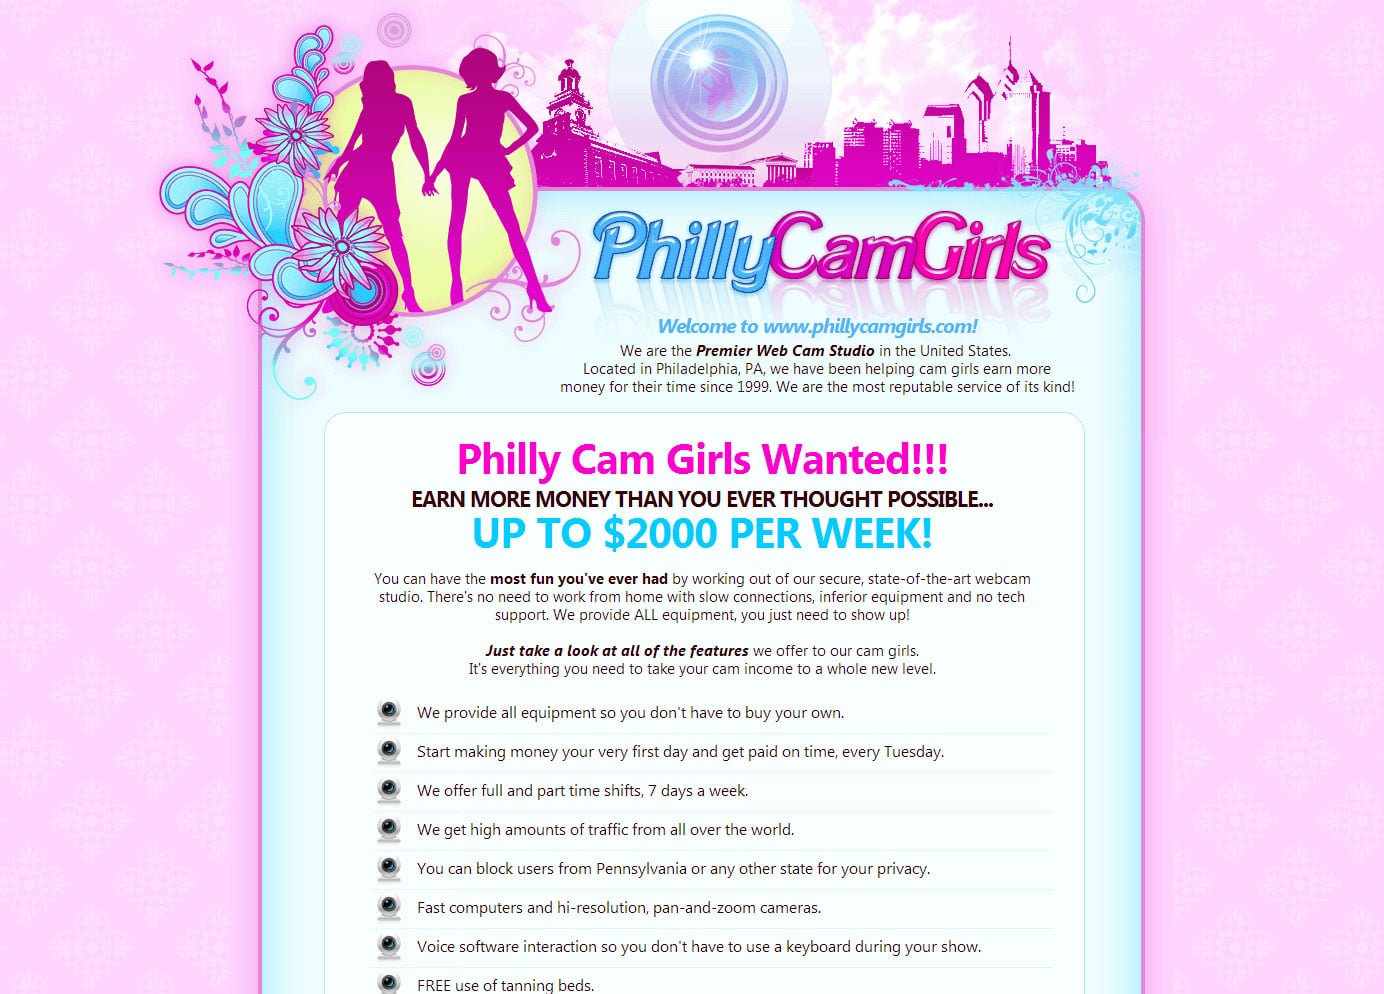 Philly Cam Girls